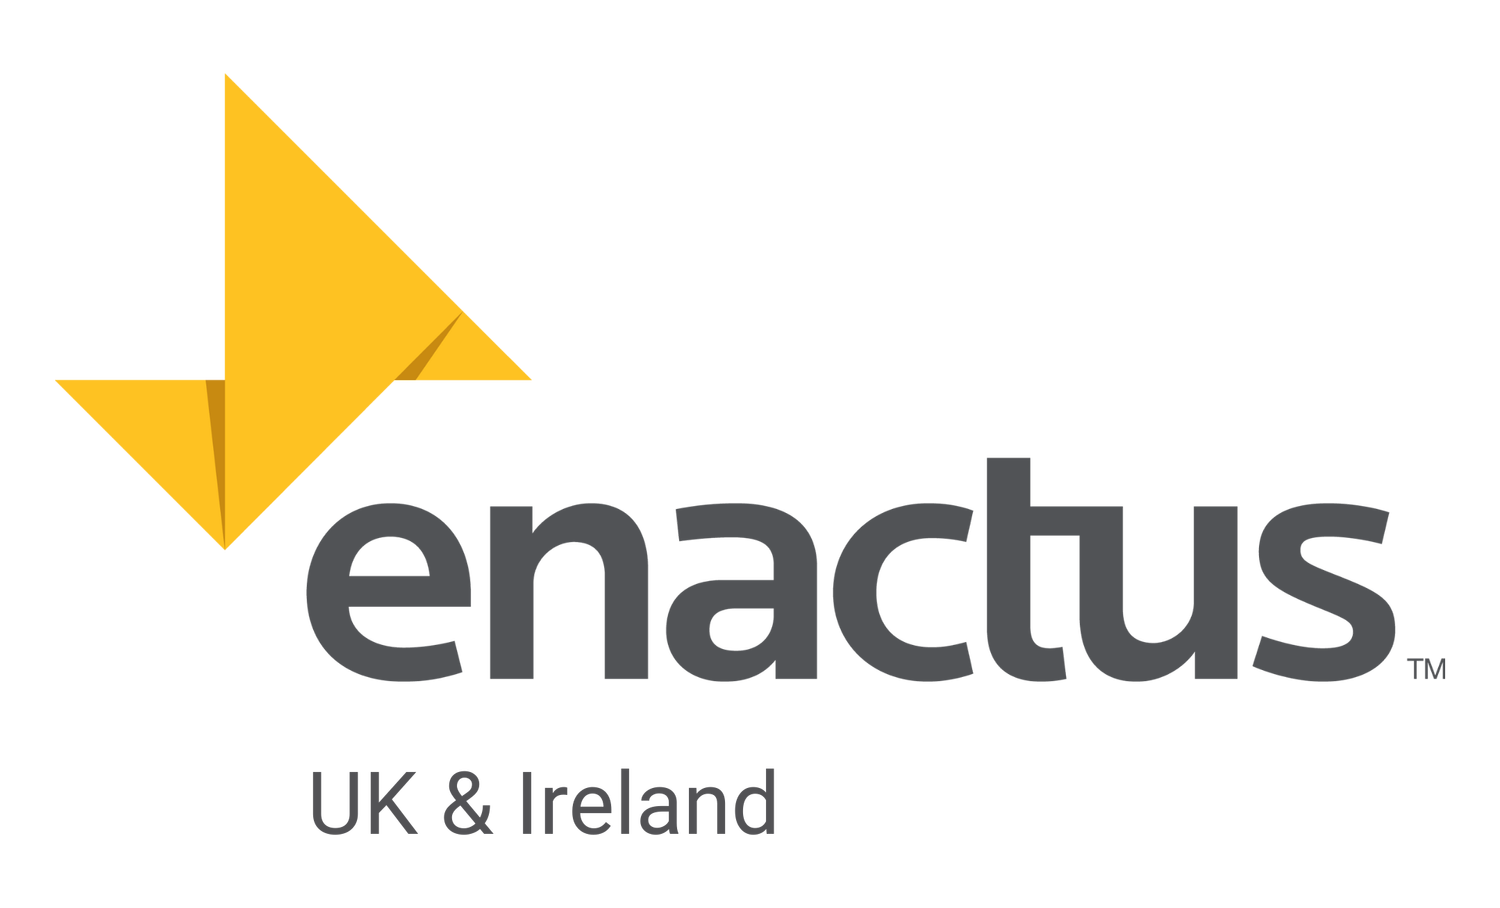 Enactus UK & Ireland